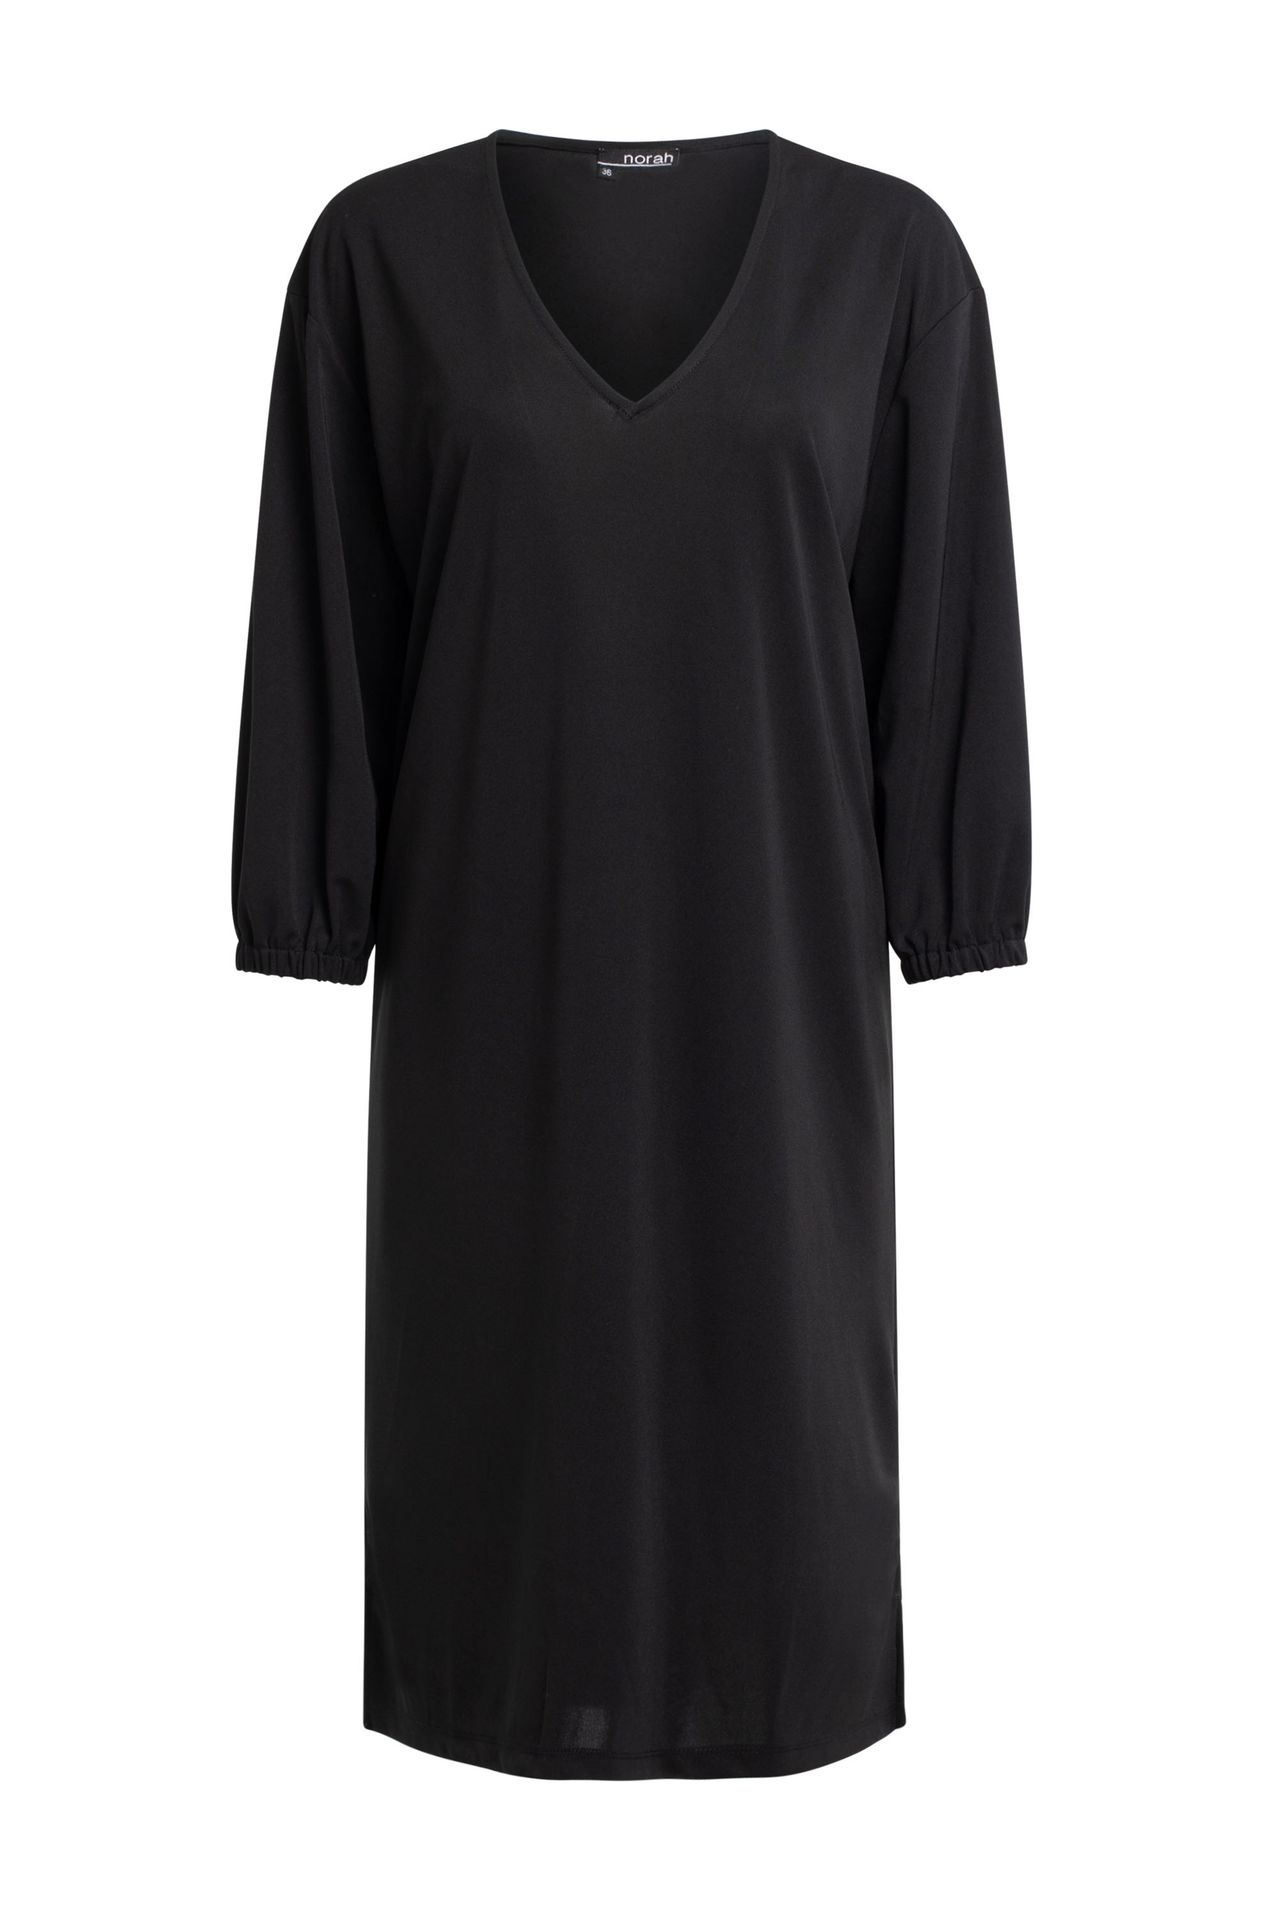 Norah Zwarte midi dress black 211094-001